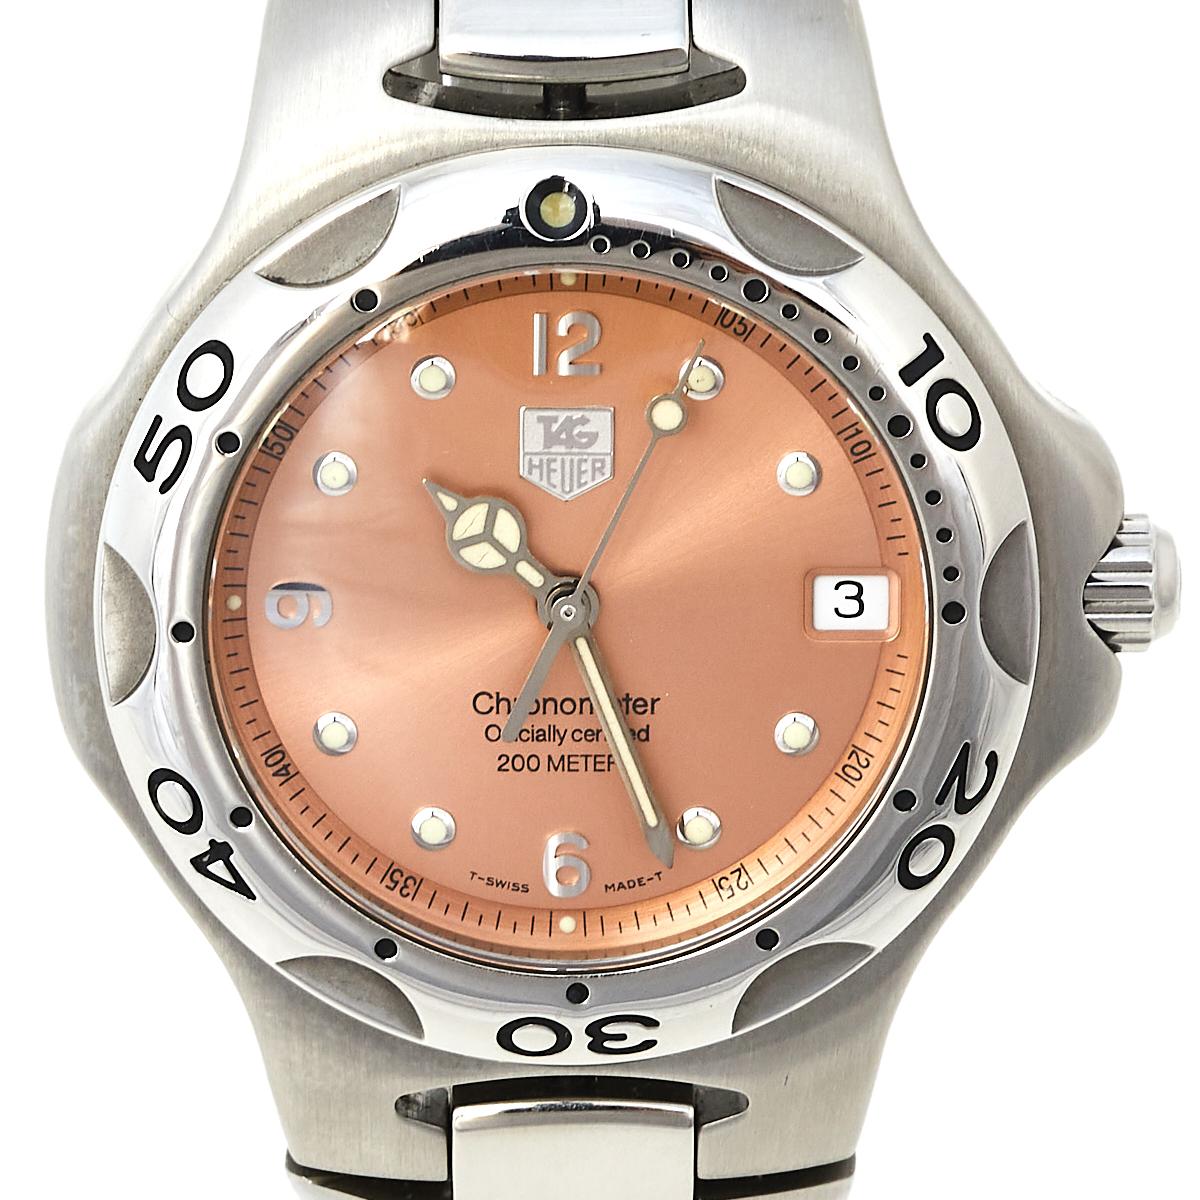 salmon dial watch